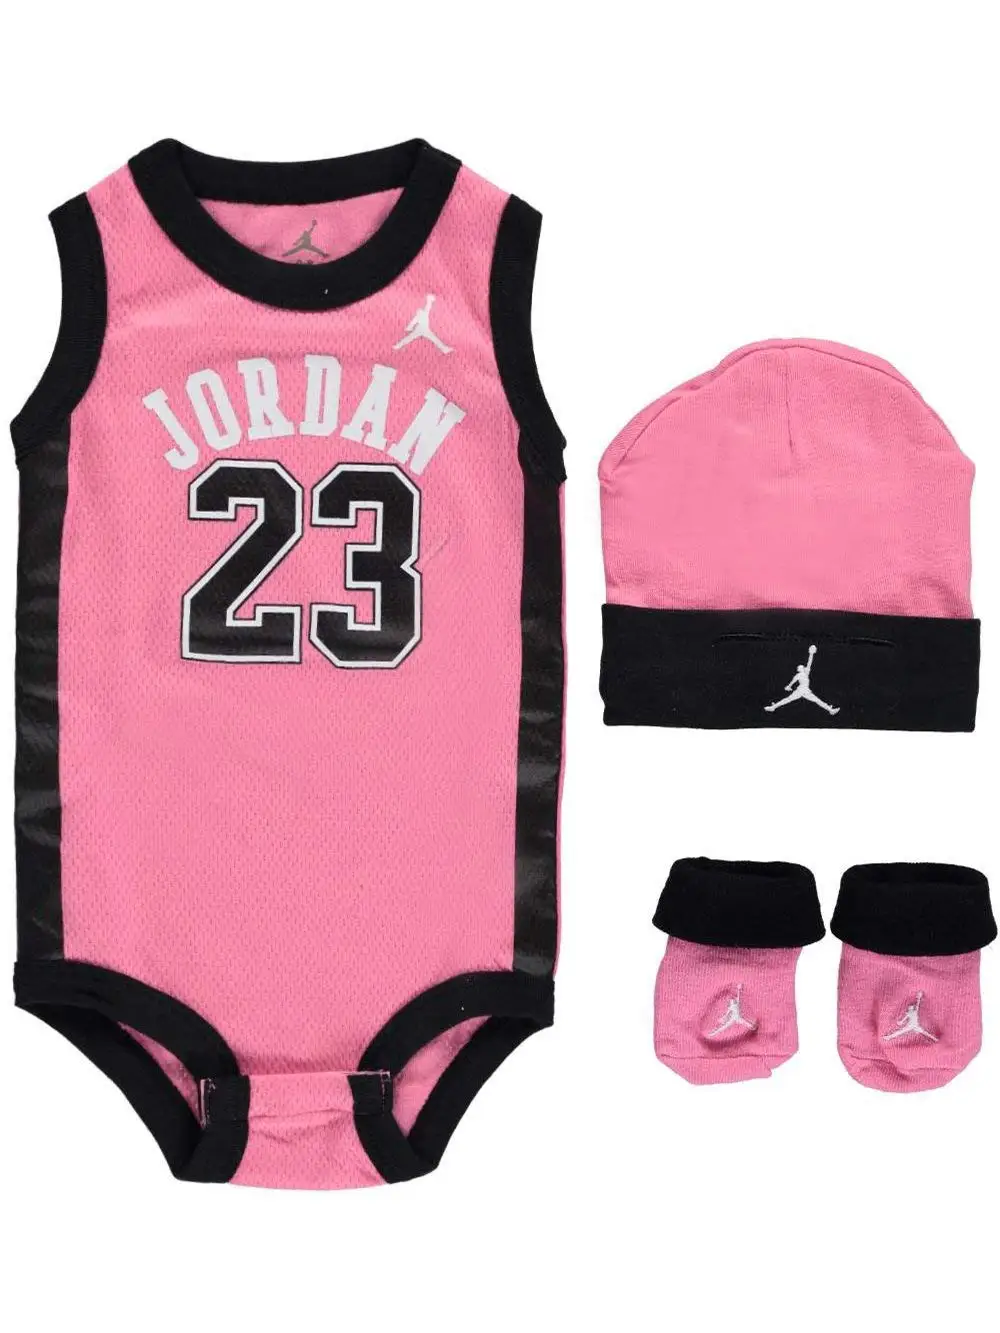 baby jordan outfit sets